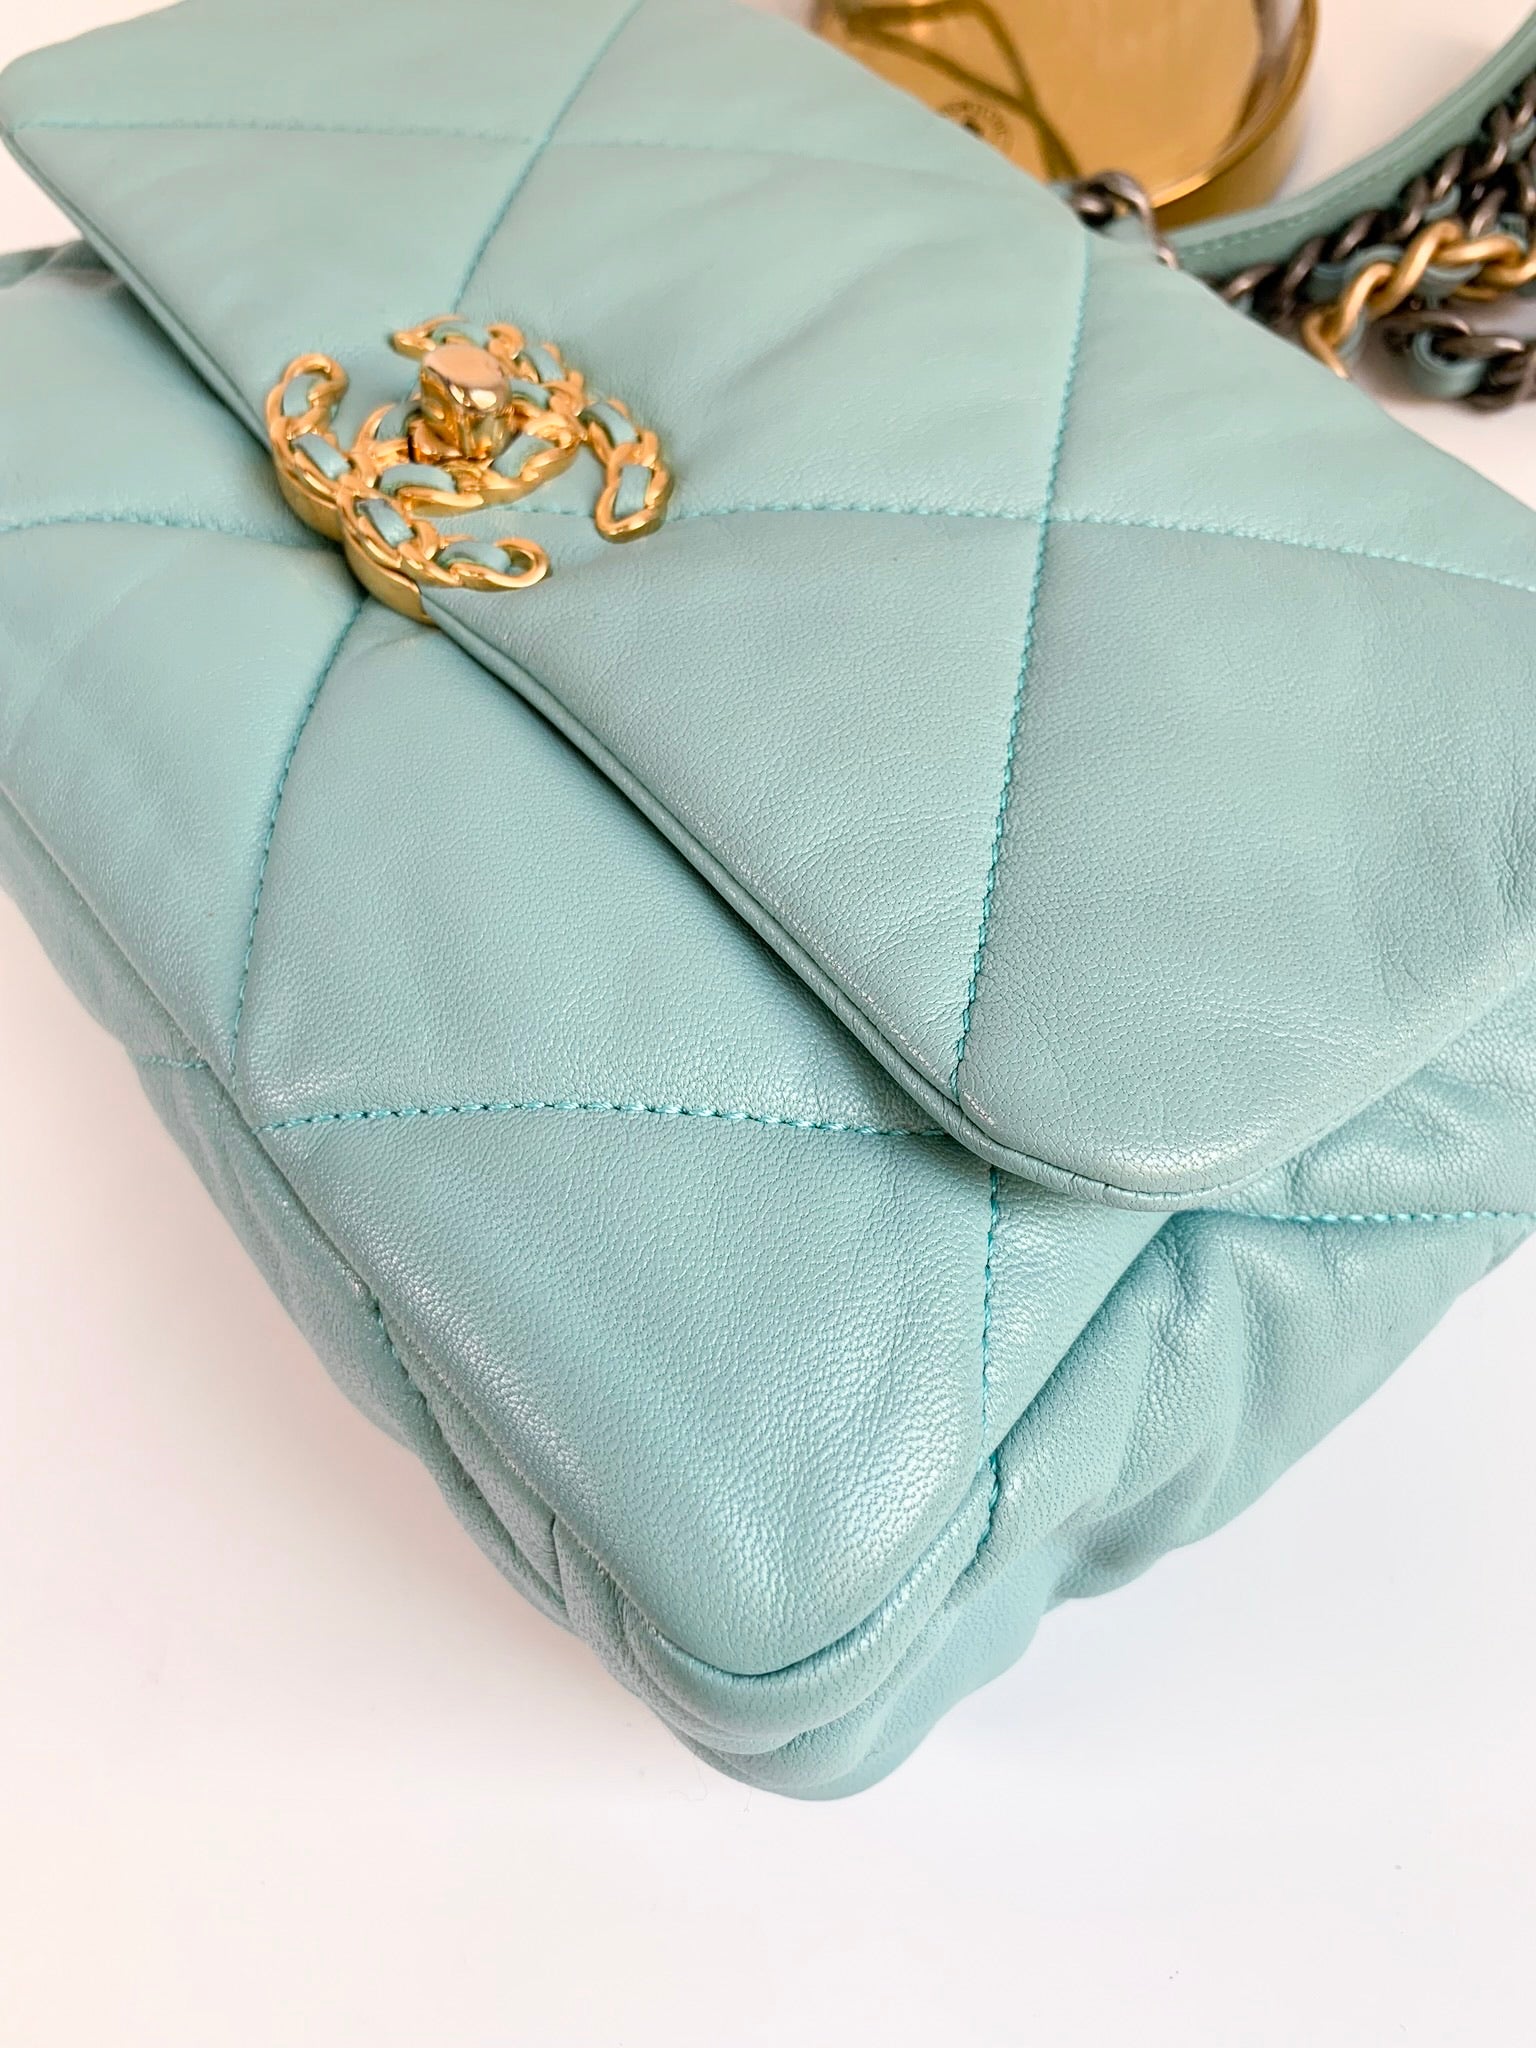 Chanel 19 Flap Bag (3127xxxx) Small Size Pastel Blue Lambskin